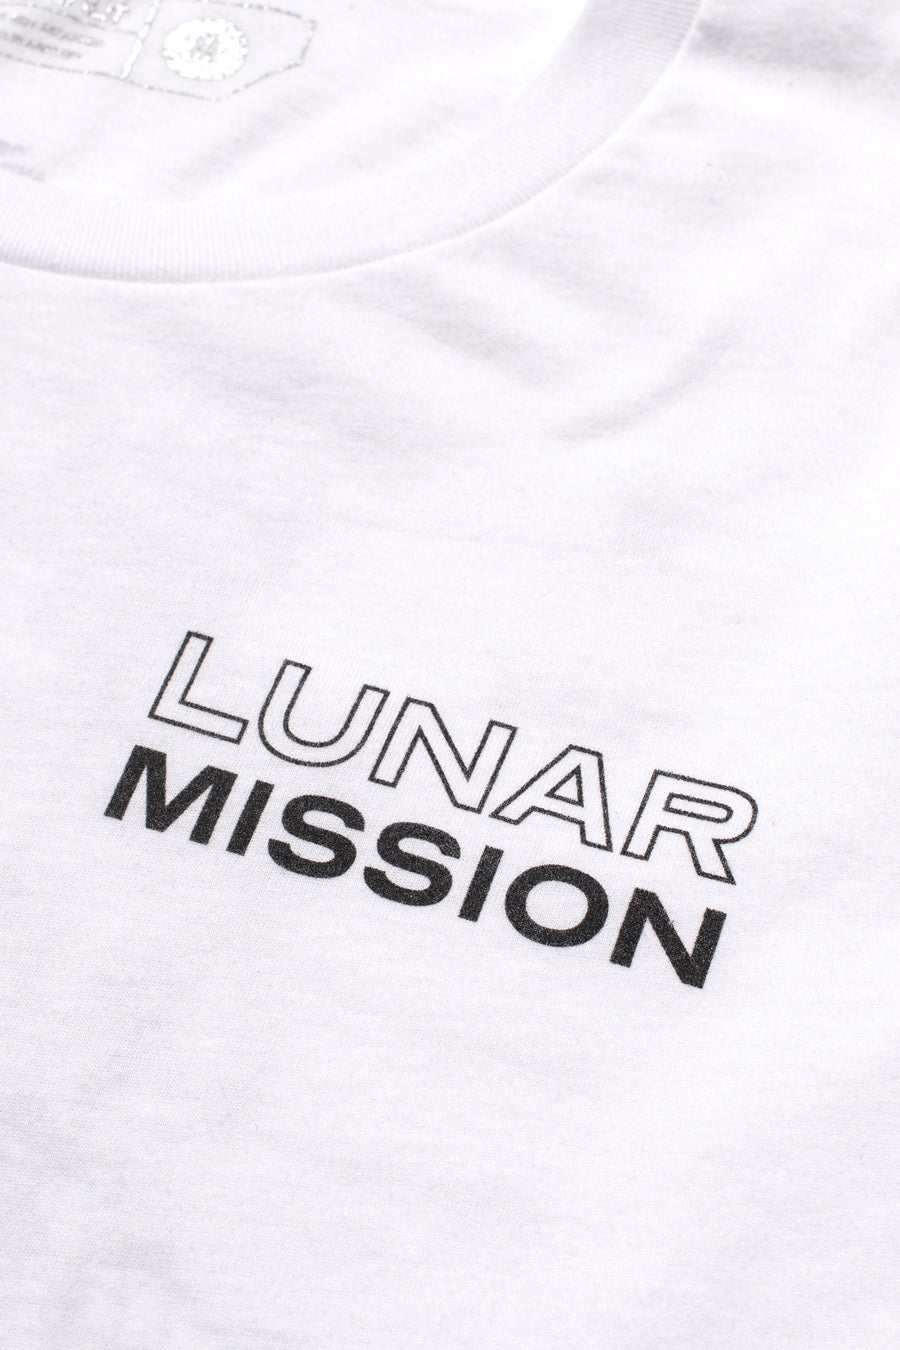 Lunar Mission Tee